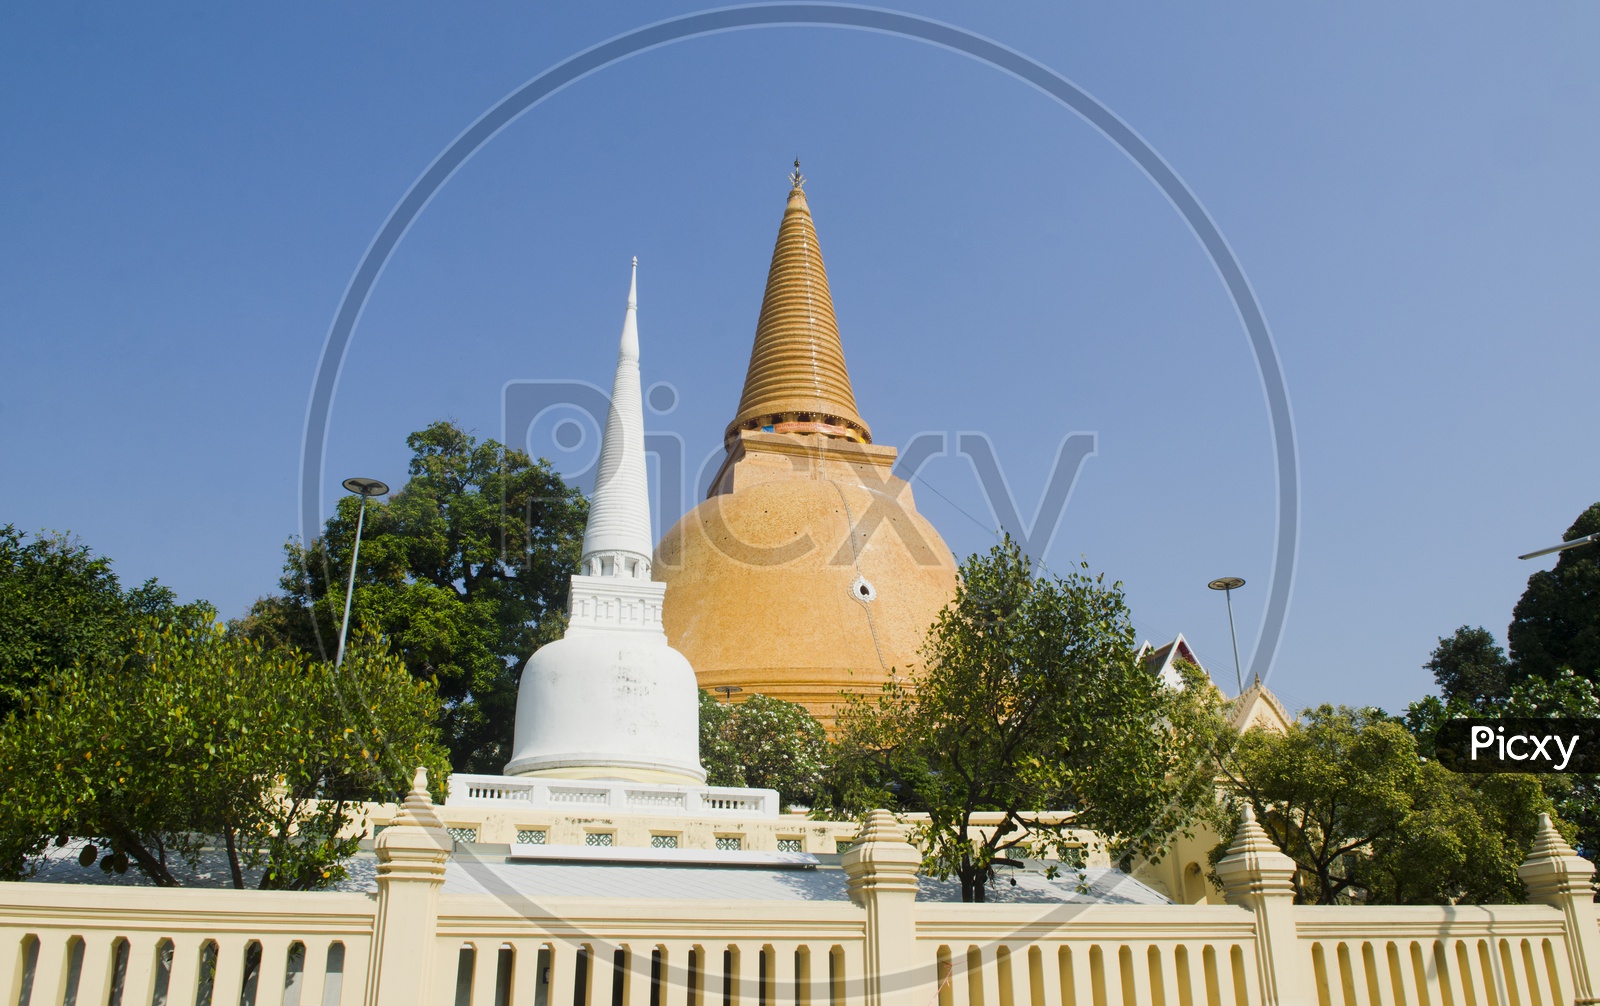 Nakhon Pathom Chedi, the tallest stupa in the world of Nakhon Pathom, Thailand.